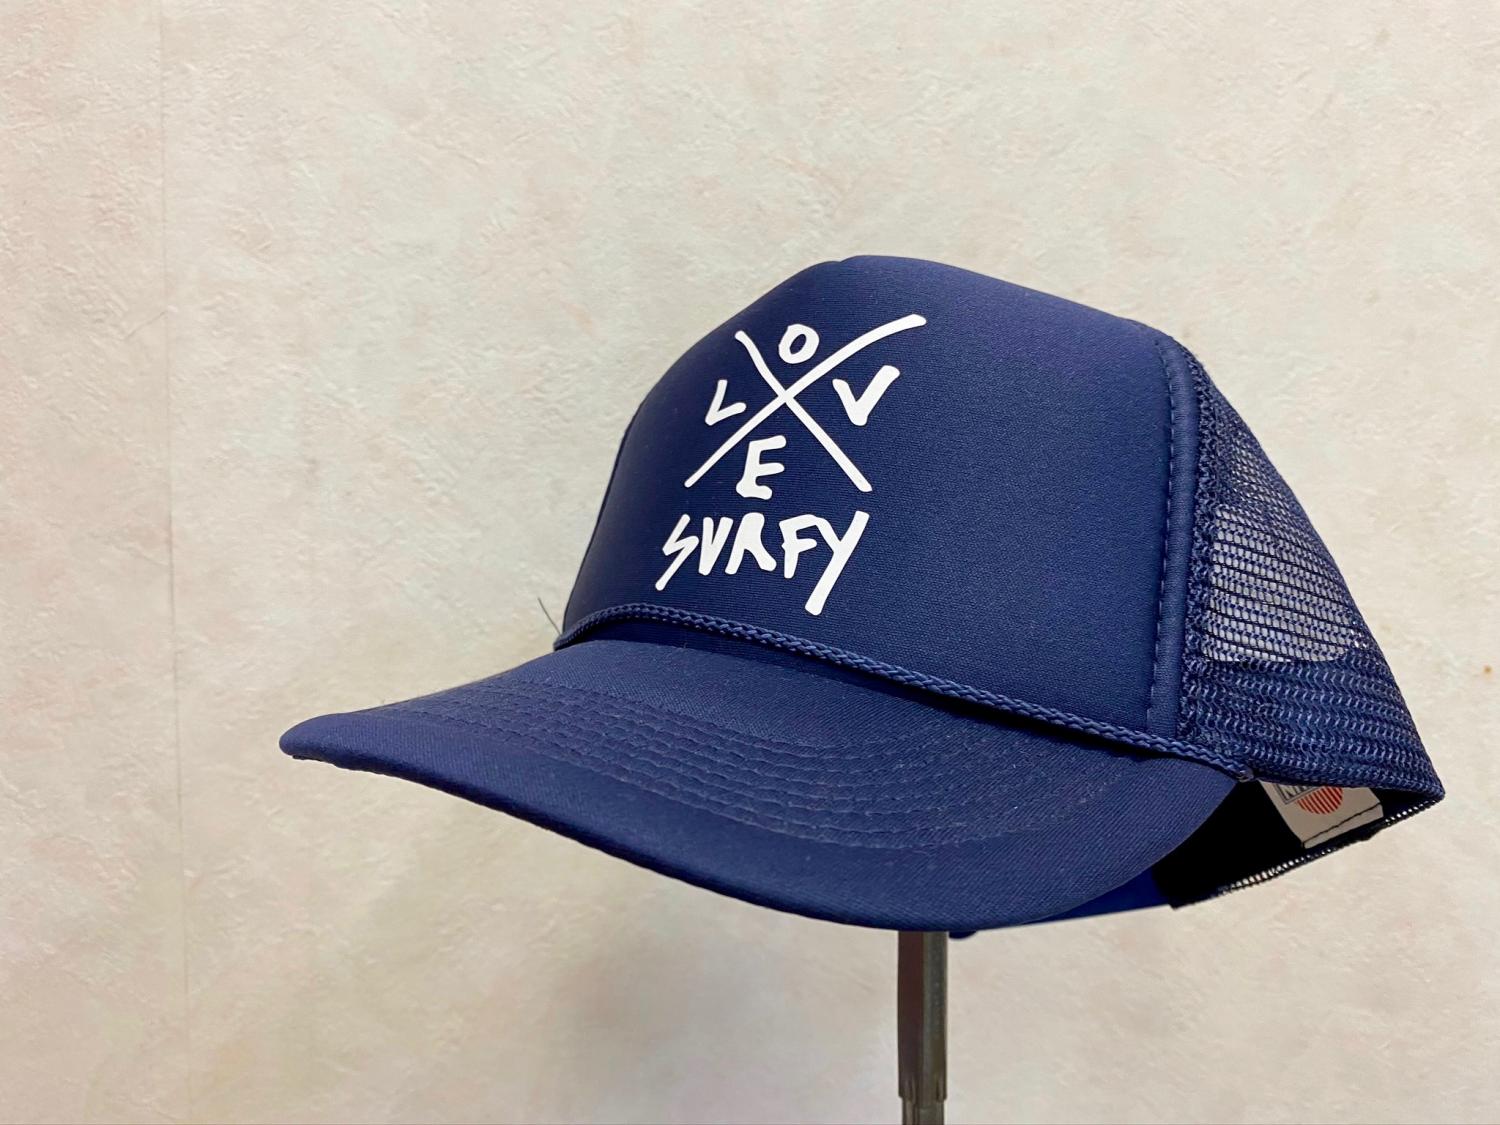 LOVE Surfy Design TRUCKER HAT